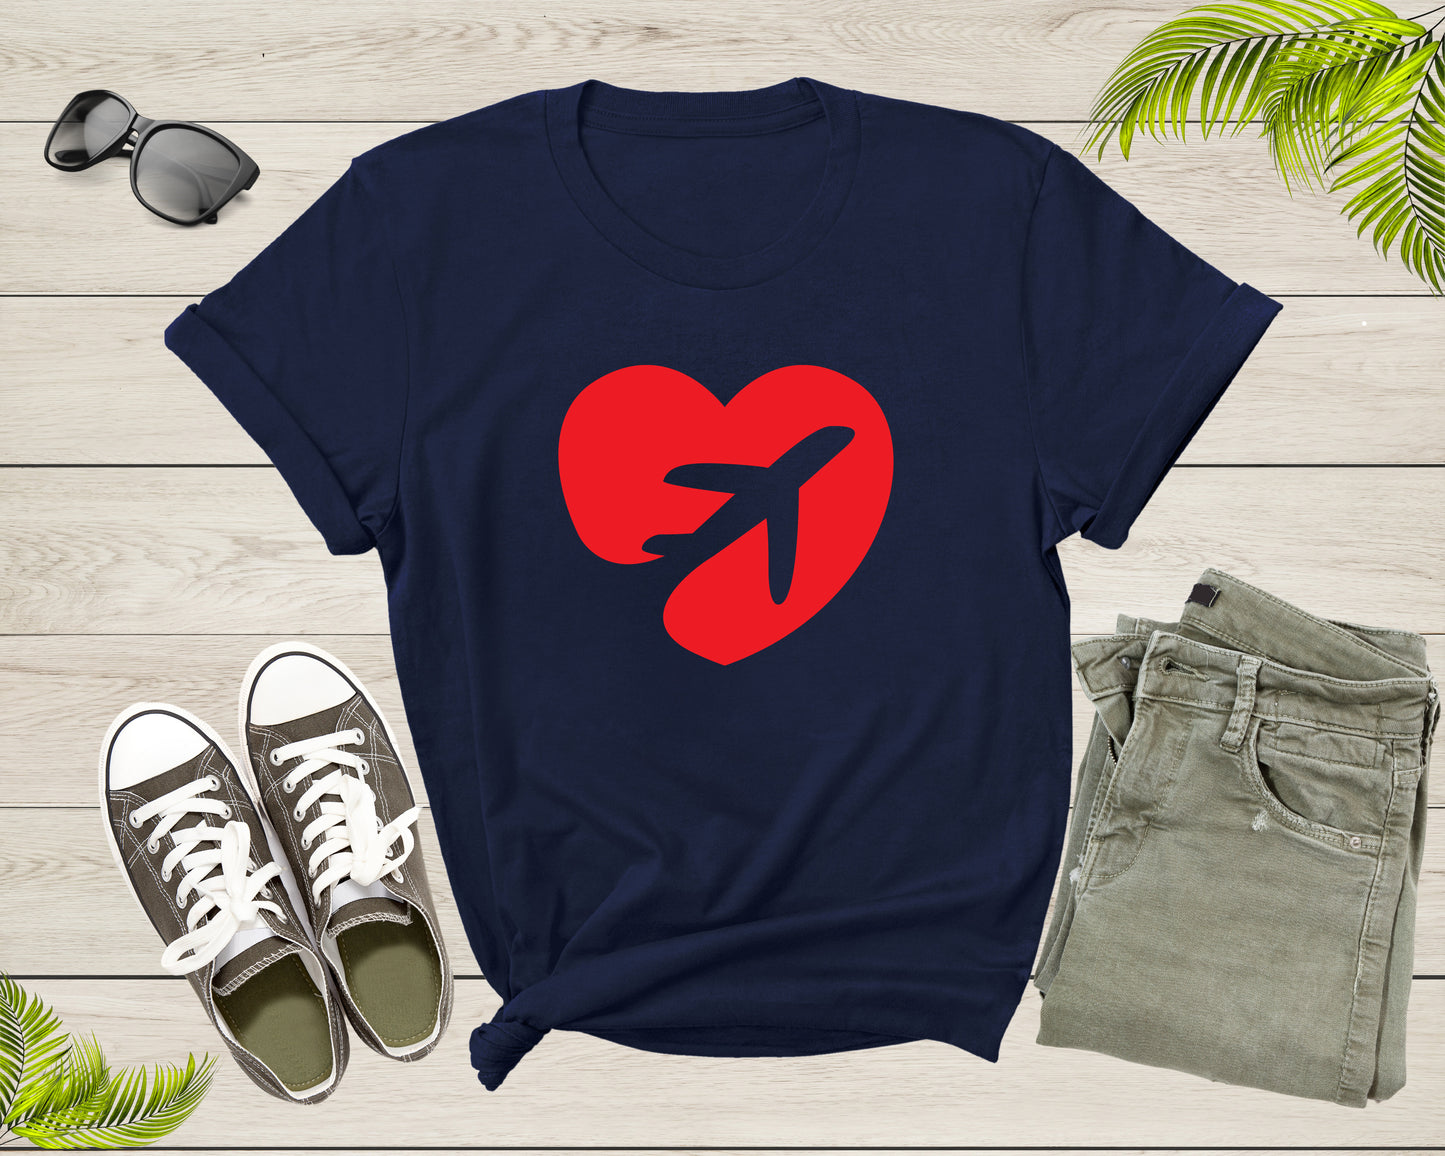 Flying Plane Airplane Aircraft Airliner Jet Love Red Heart T-Shirt Plane Lover Gift T Shirt for Men Women Kids Boys Girls Graphic Tshirt